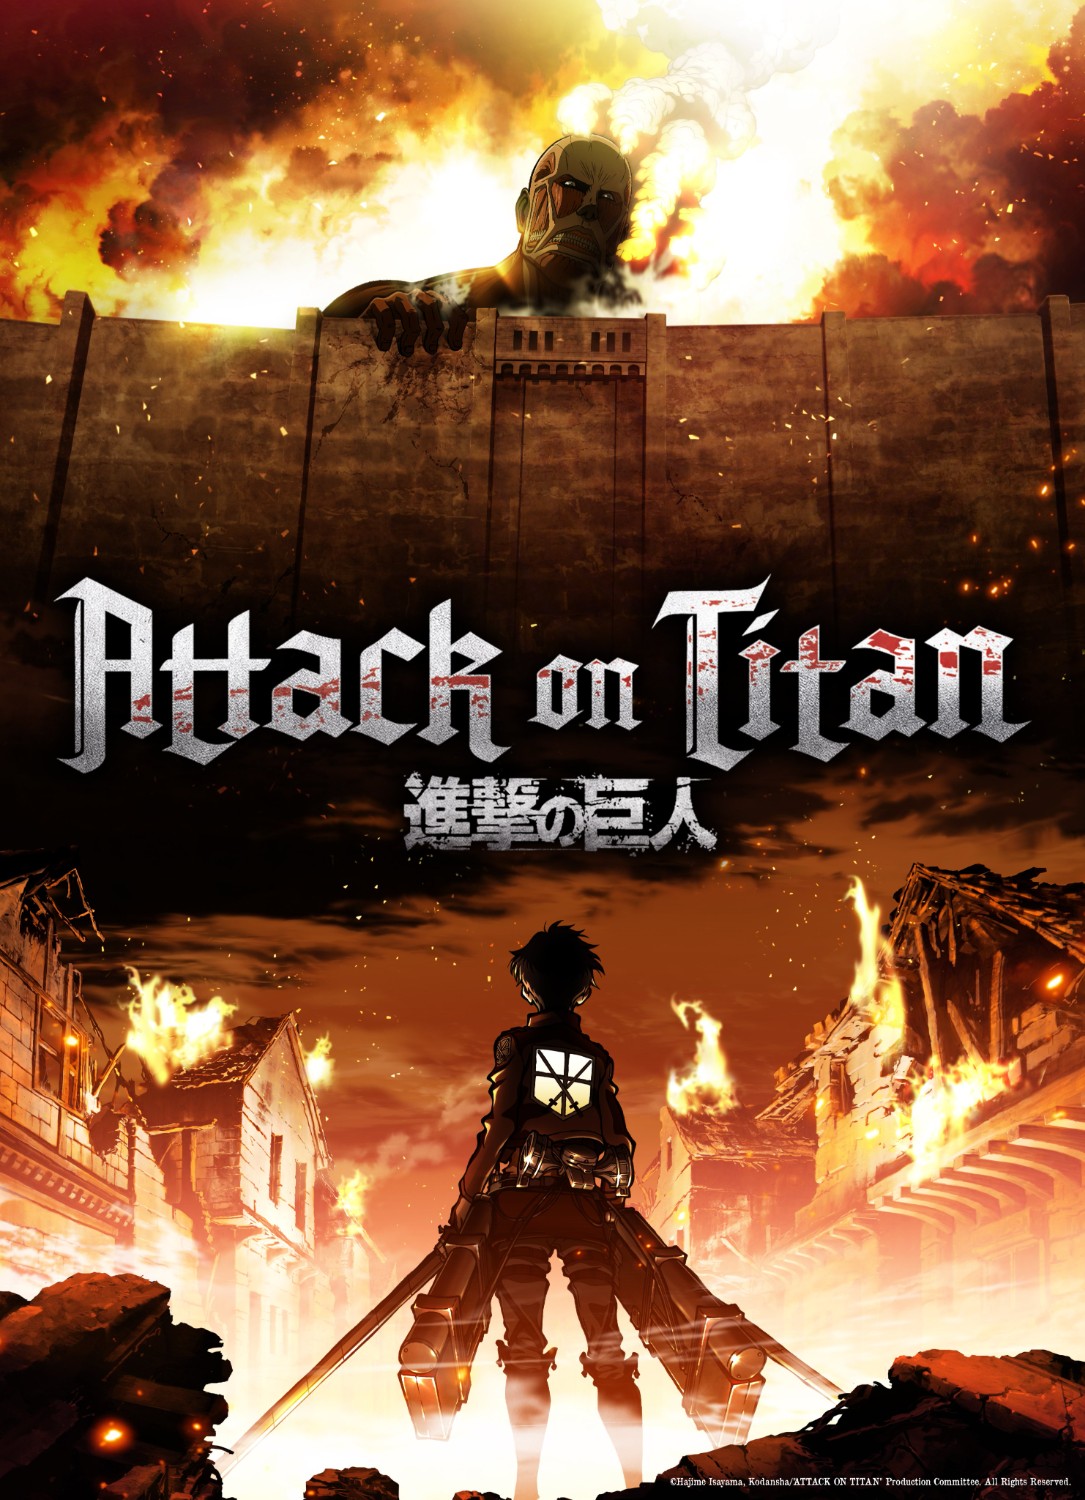 Archfiend ❄ (on Hiatus) on X: We Want Attack on Titan Season 4 on Netflix  India #AttackonNetflixIndia #AttackontitaninNetflixIndia  #AttackonTitanFinalSeason  / X